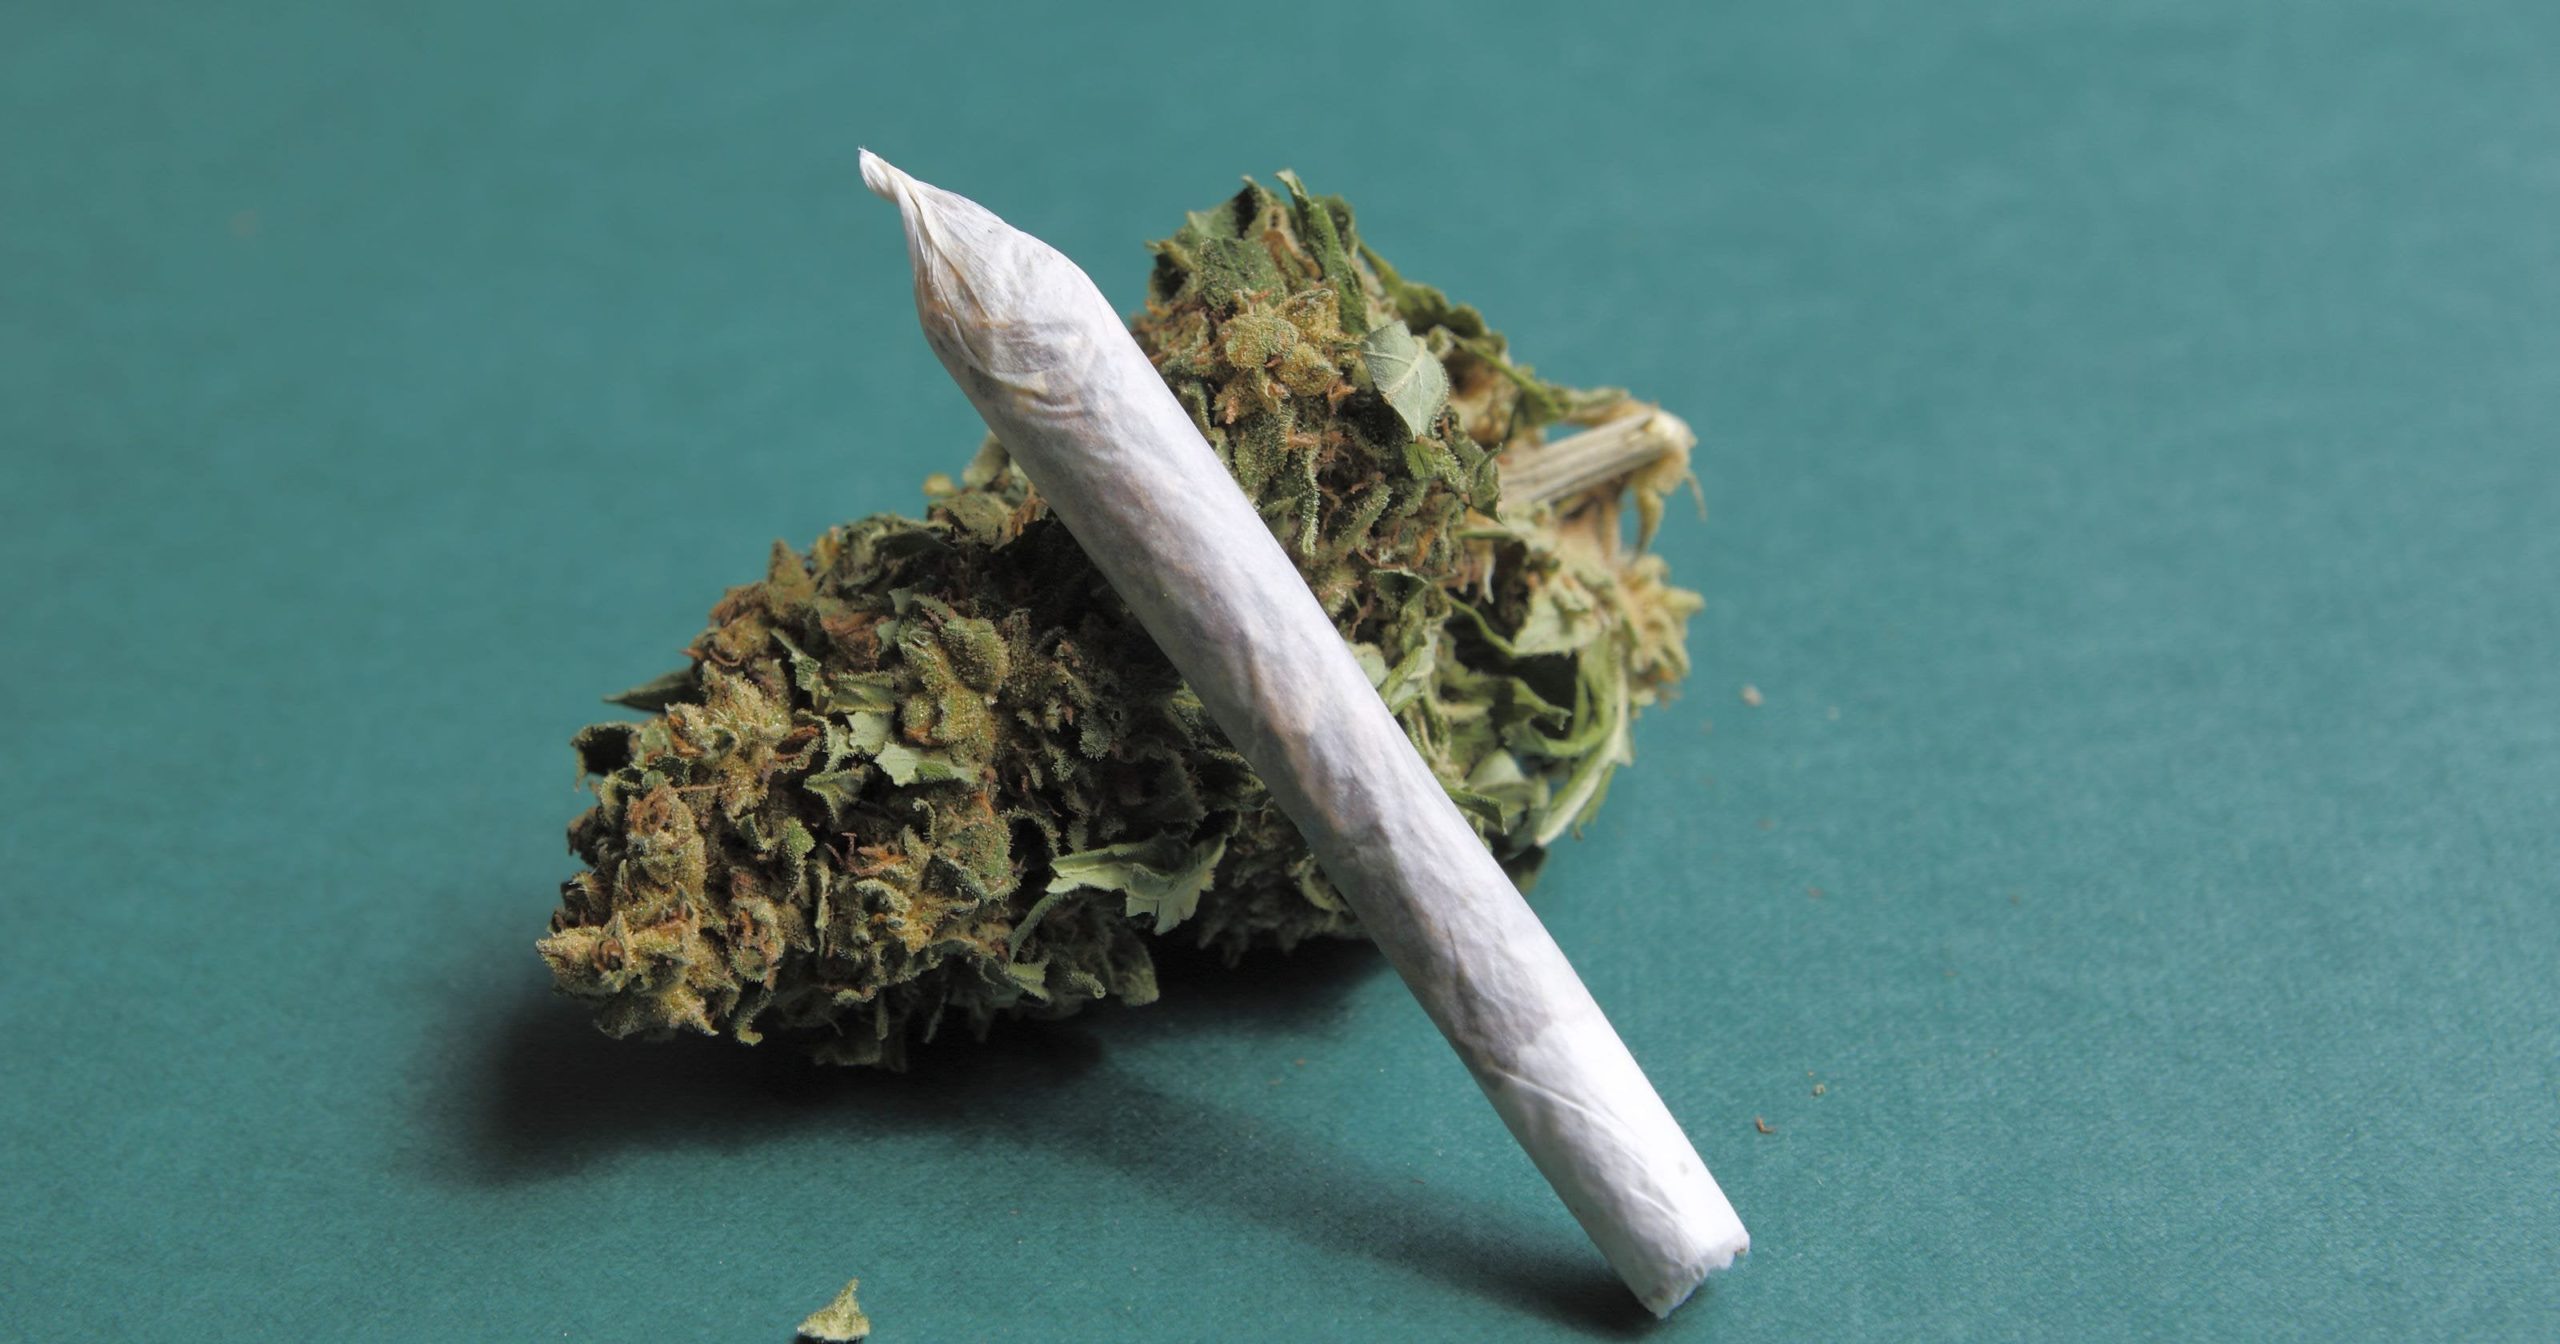 What to look for in Arizona's marijuana legalization ballot measure